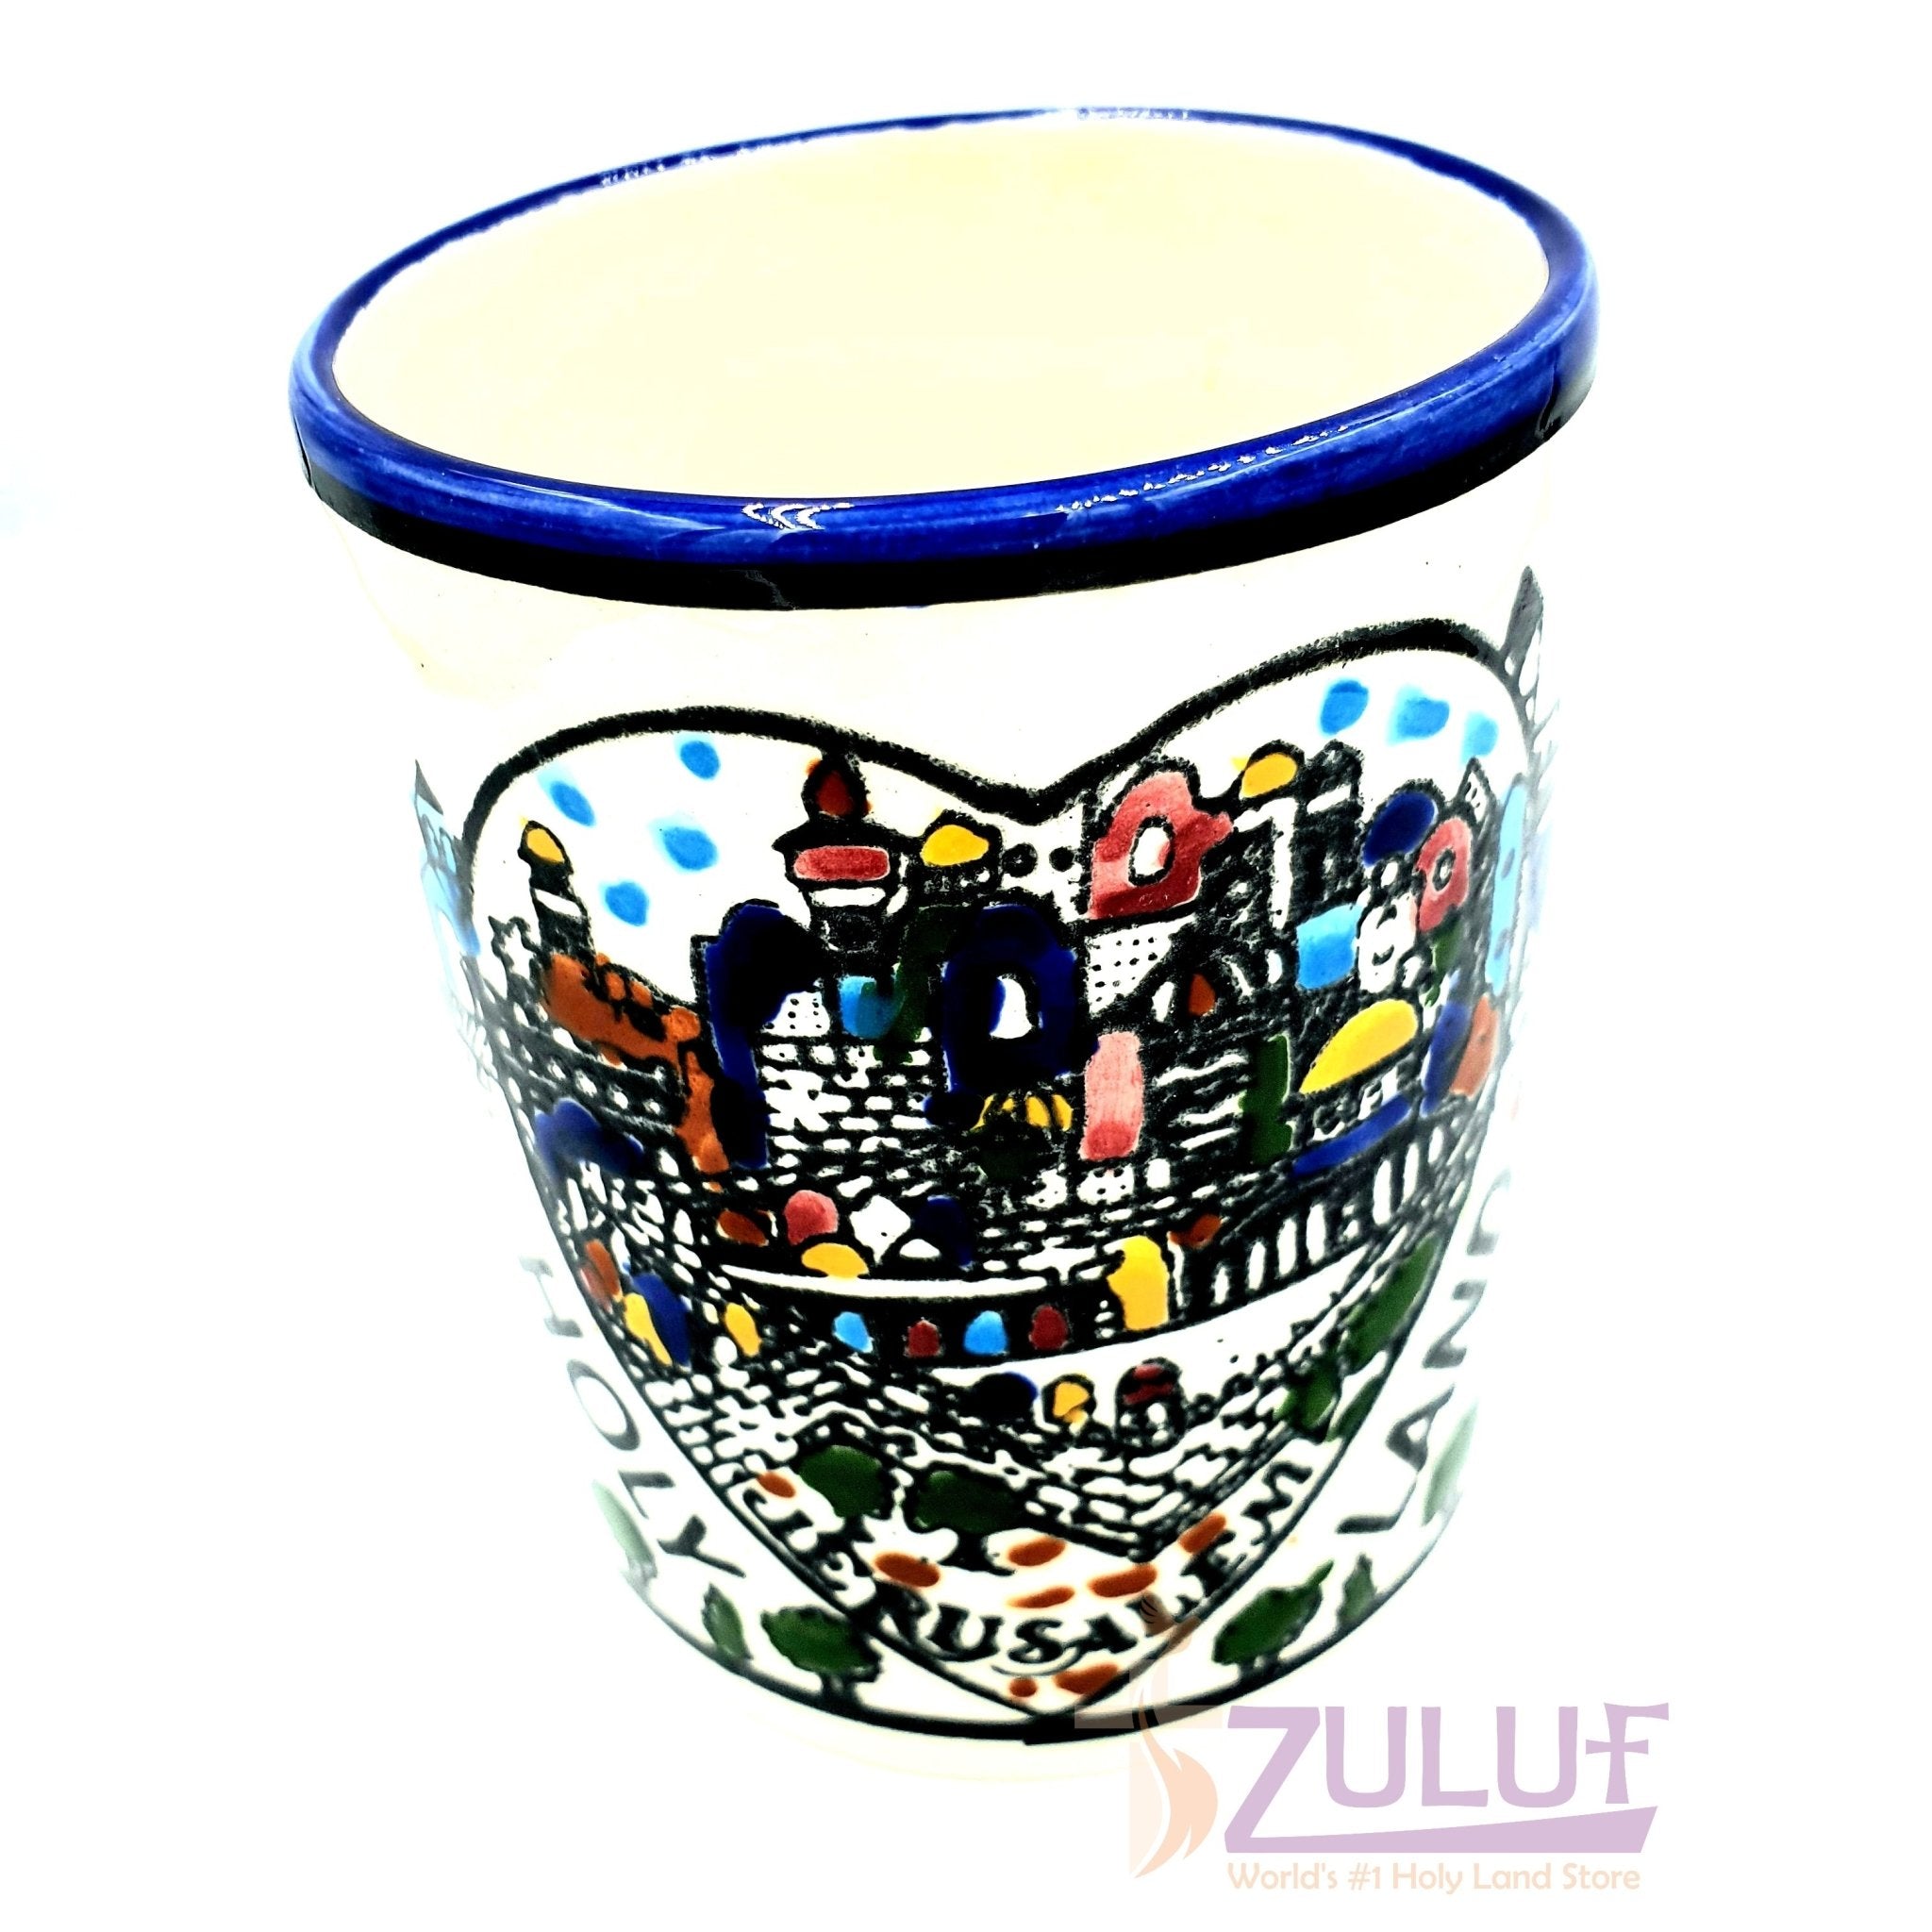 Big Ceramic Mug - Ceramic Holy Land Mug Souvenir by Zuluf Factory - CER023 - Zuluf